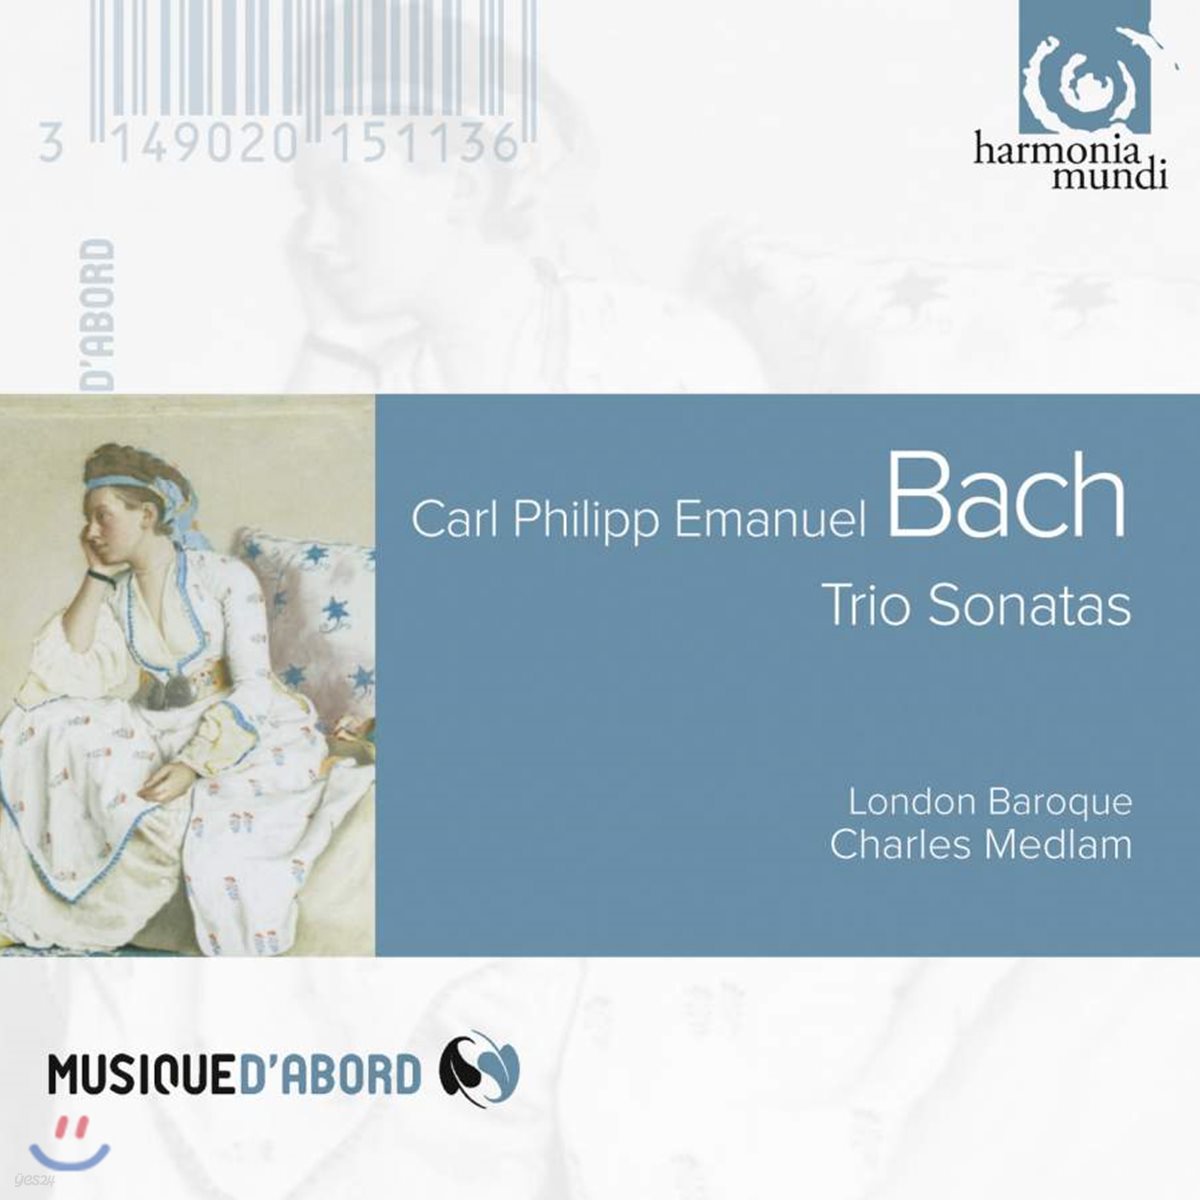 London Baroque / Charles Medlam 칼 필립 에마누엘 바흐: 트리오 소나타 (CPE Bach: Sonatas for viola da gamba and continuo)